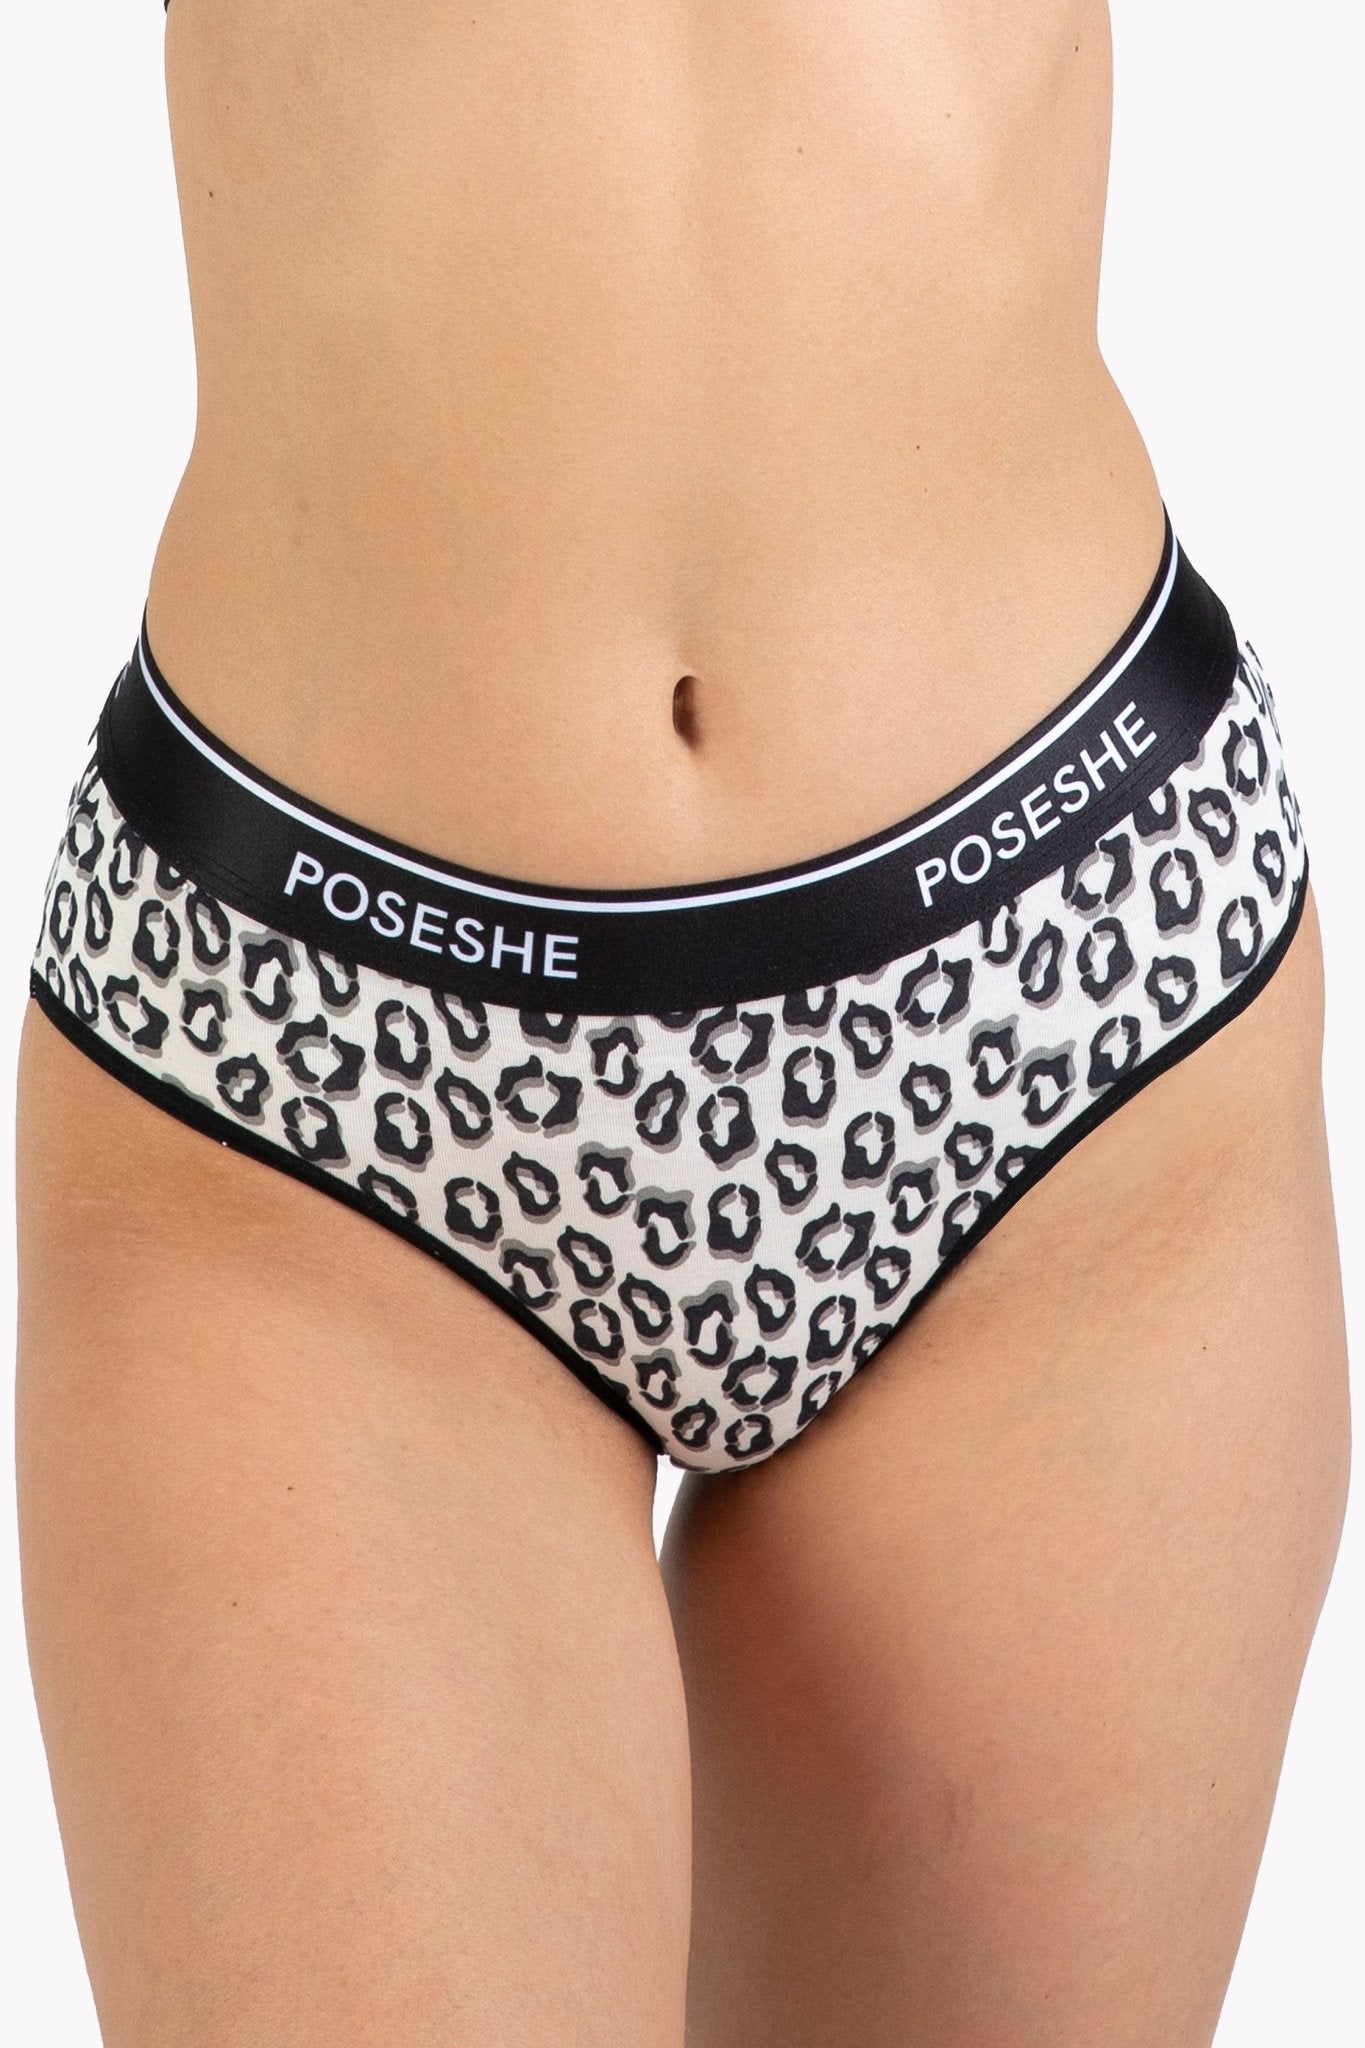 Body Liberator Bikini Panty, 3-Pack - POSESHE